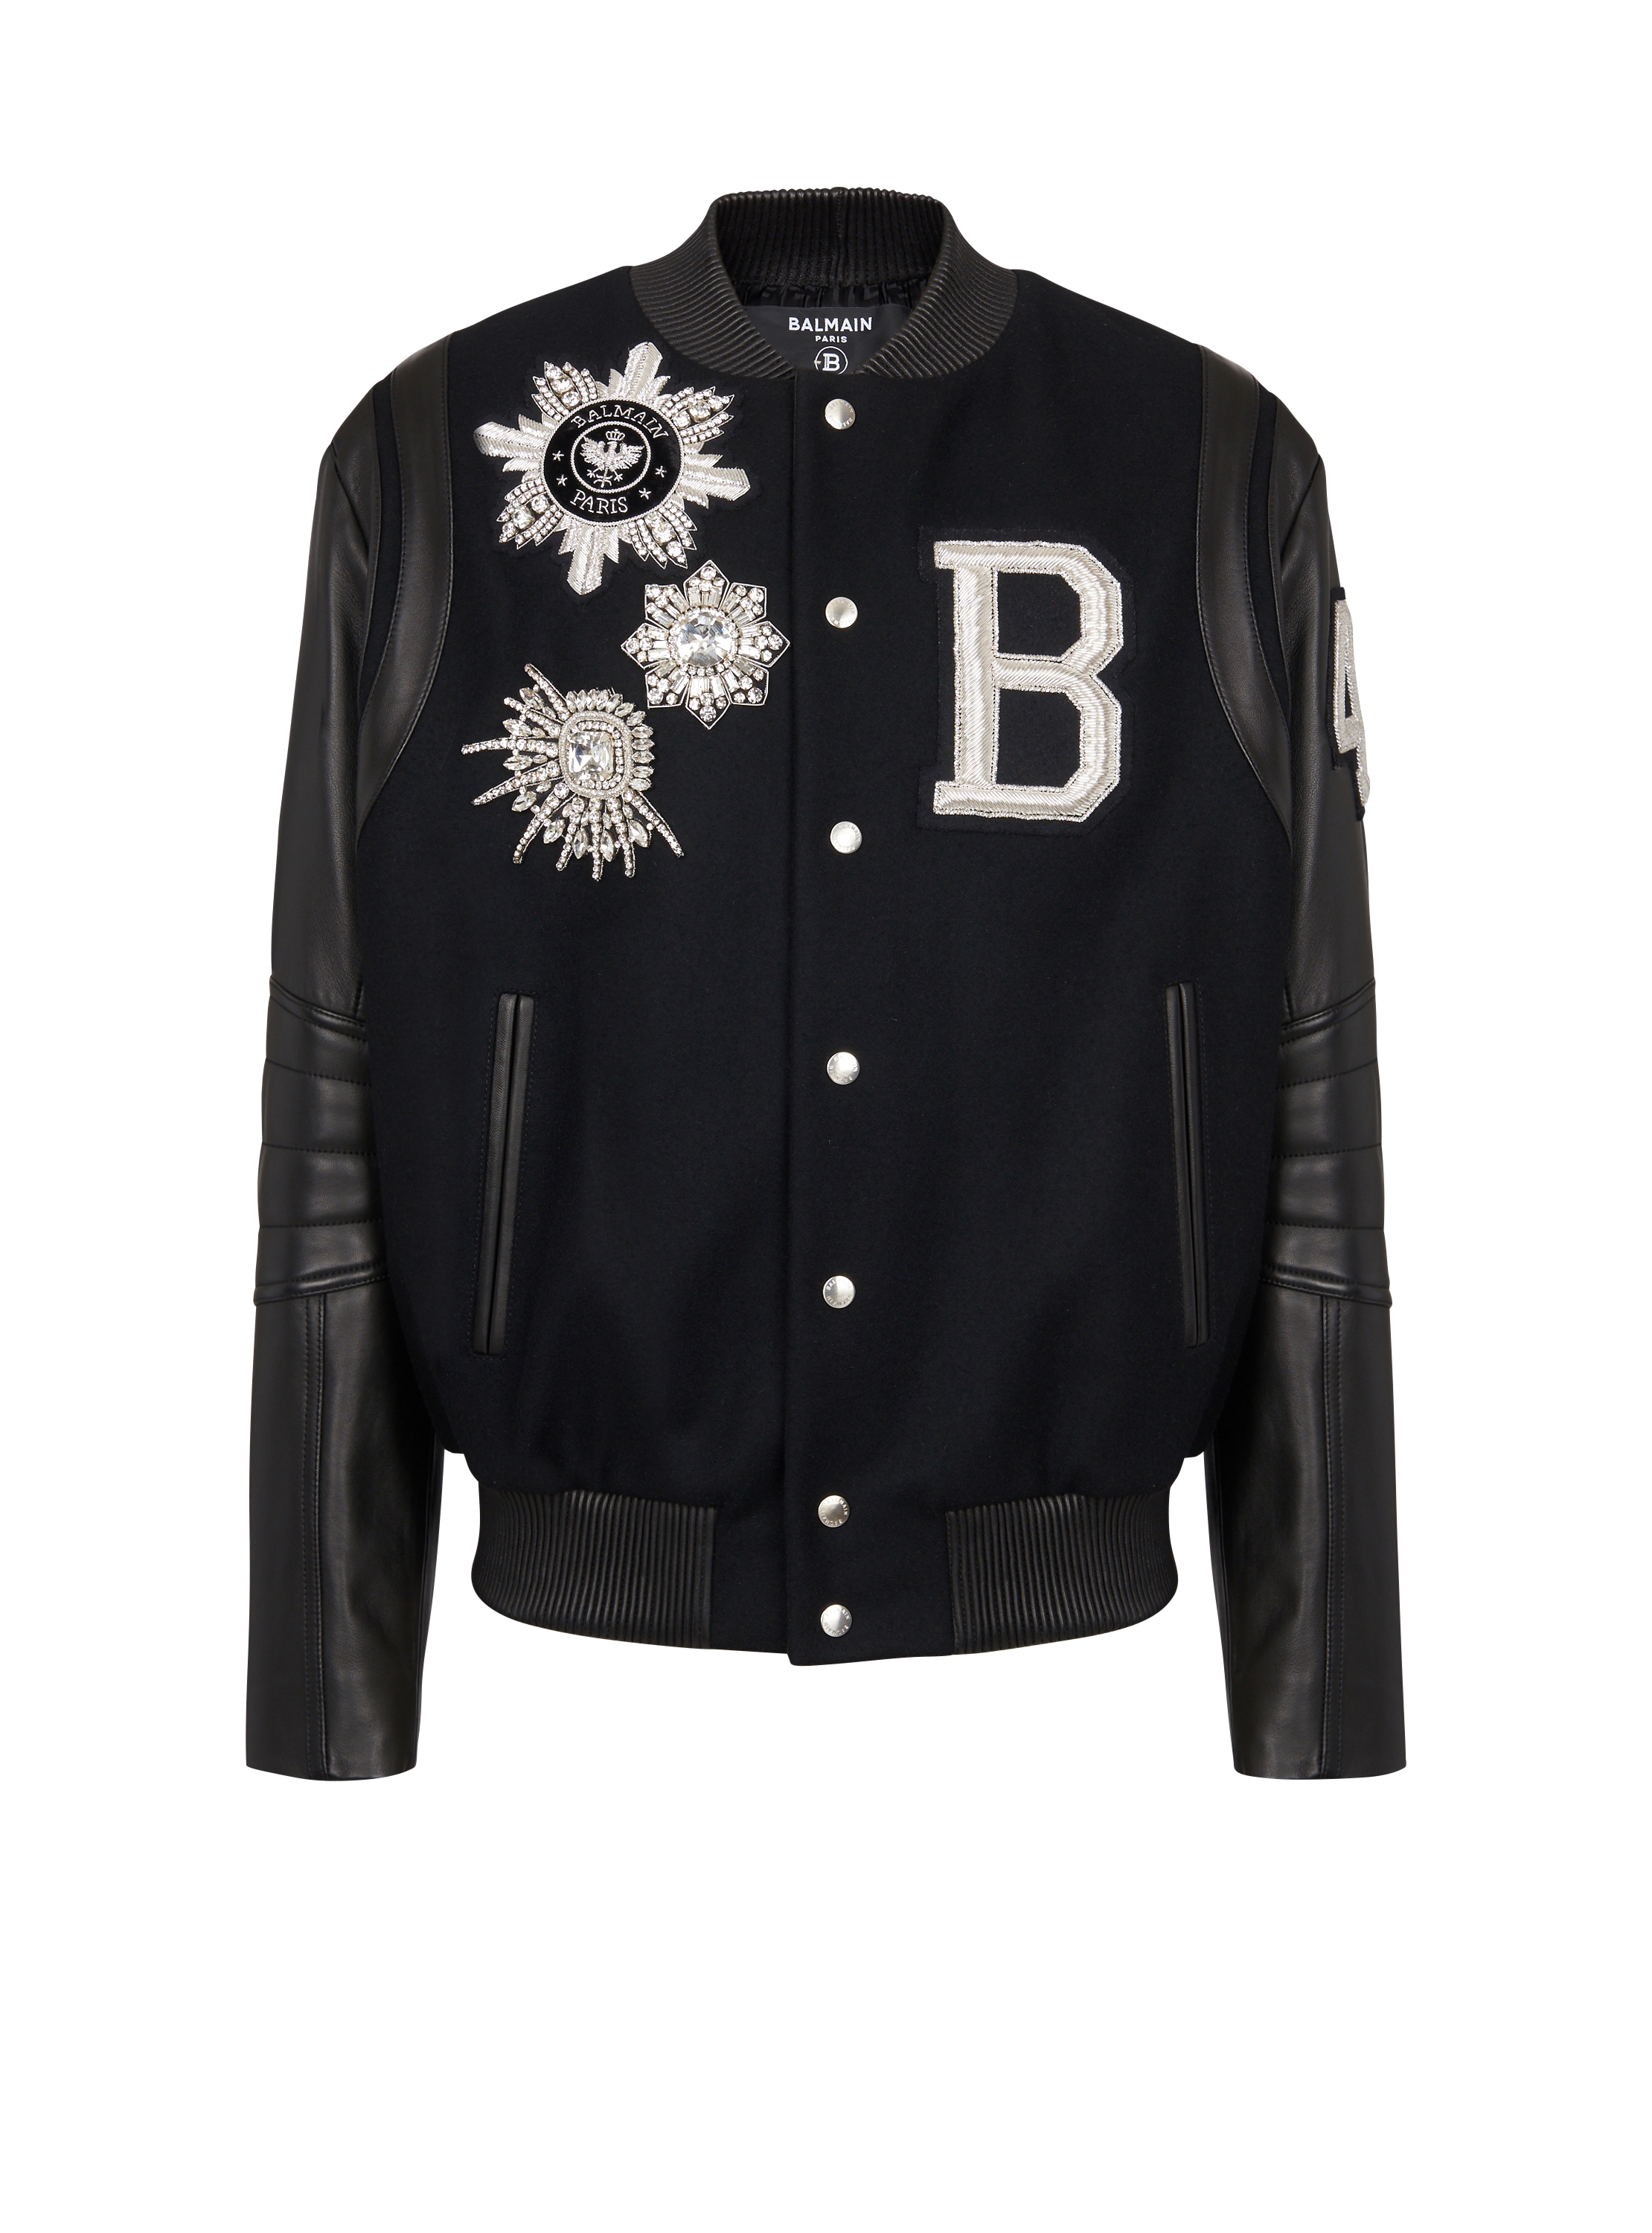 Balmain leather and wool jacket, black, hi-res